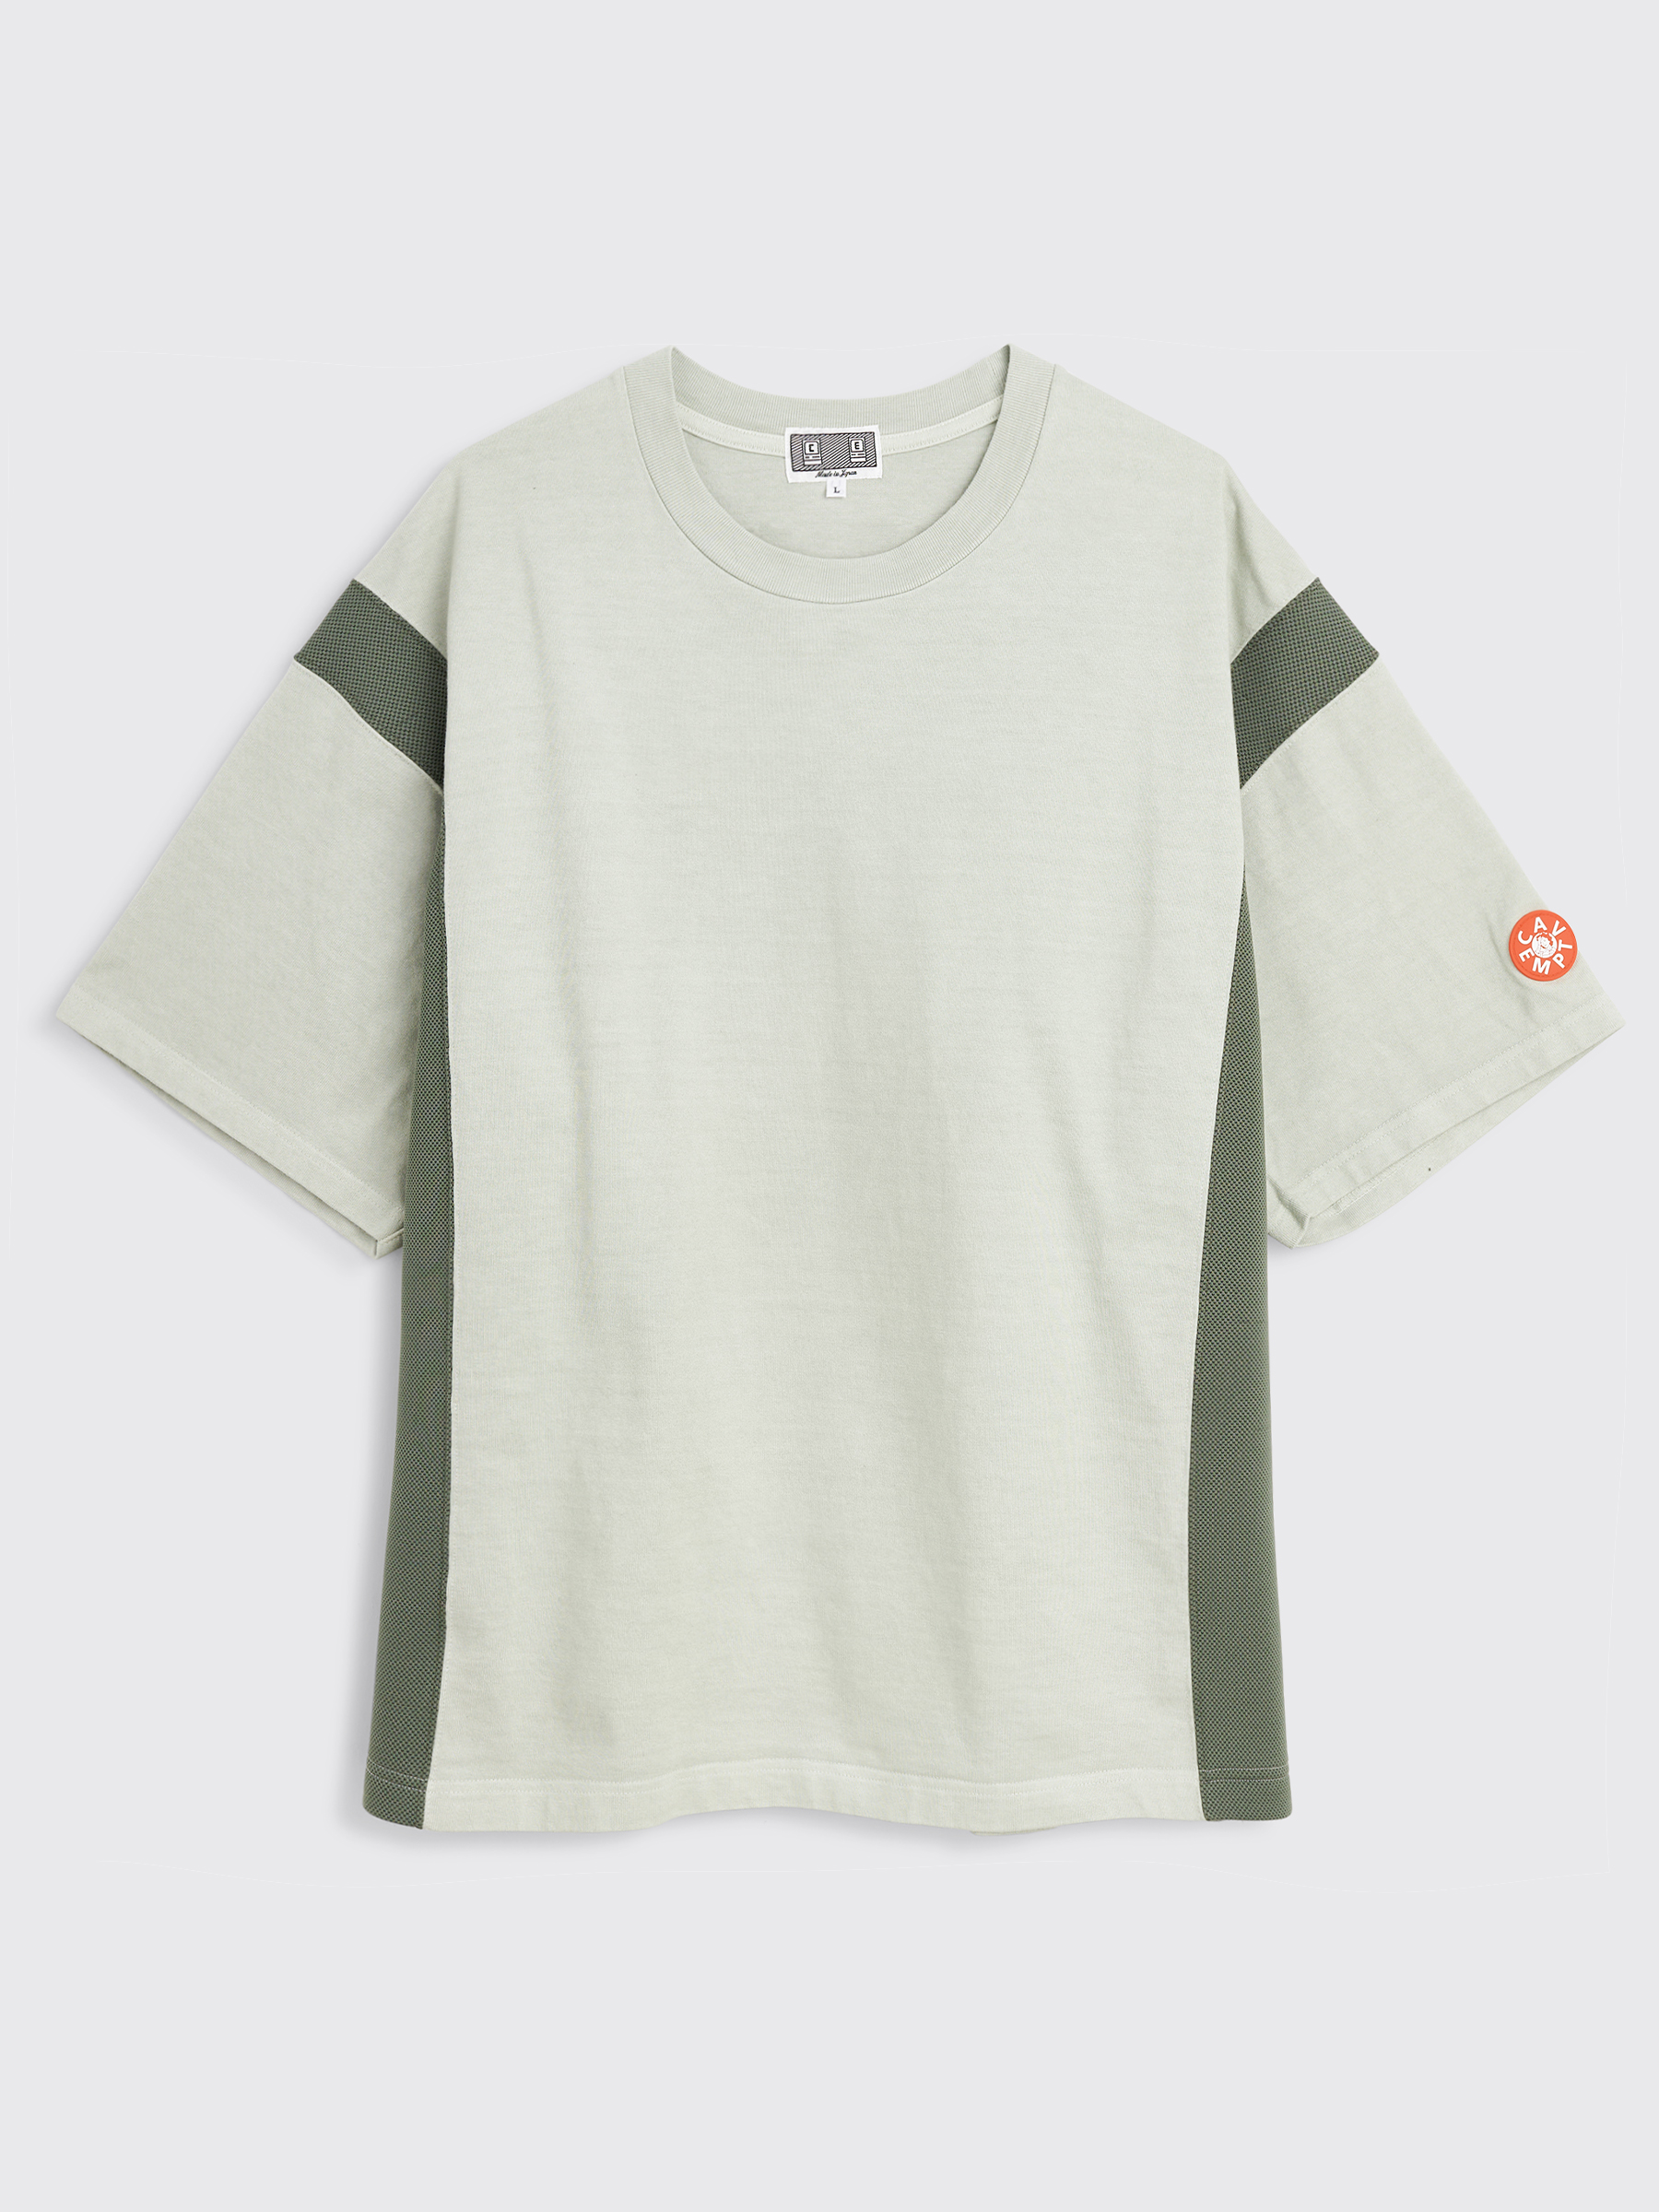 Très Bien - Side T-shirt Big Overdye Cav Knit Grey D Empt